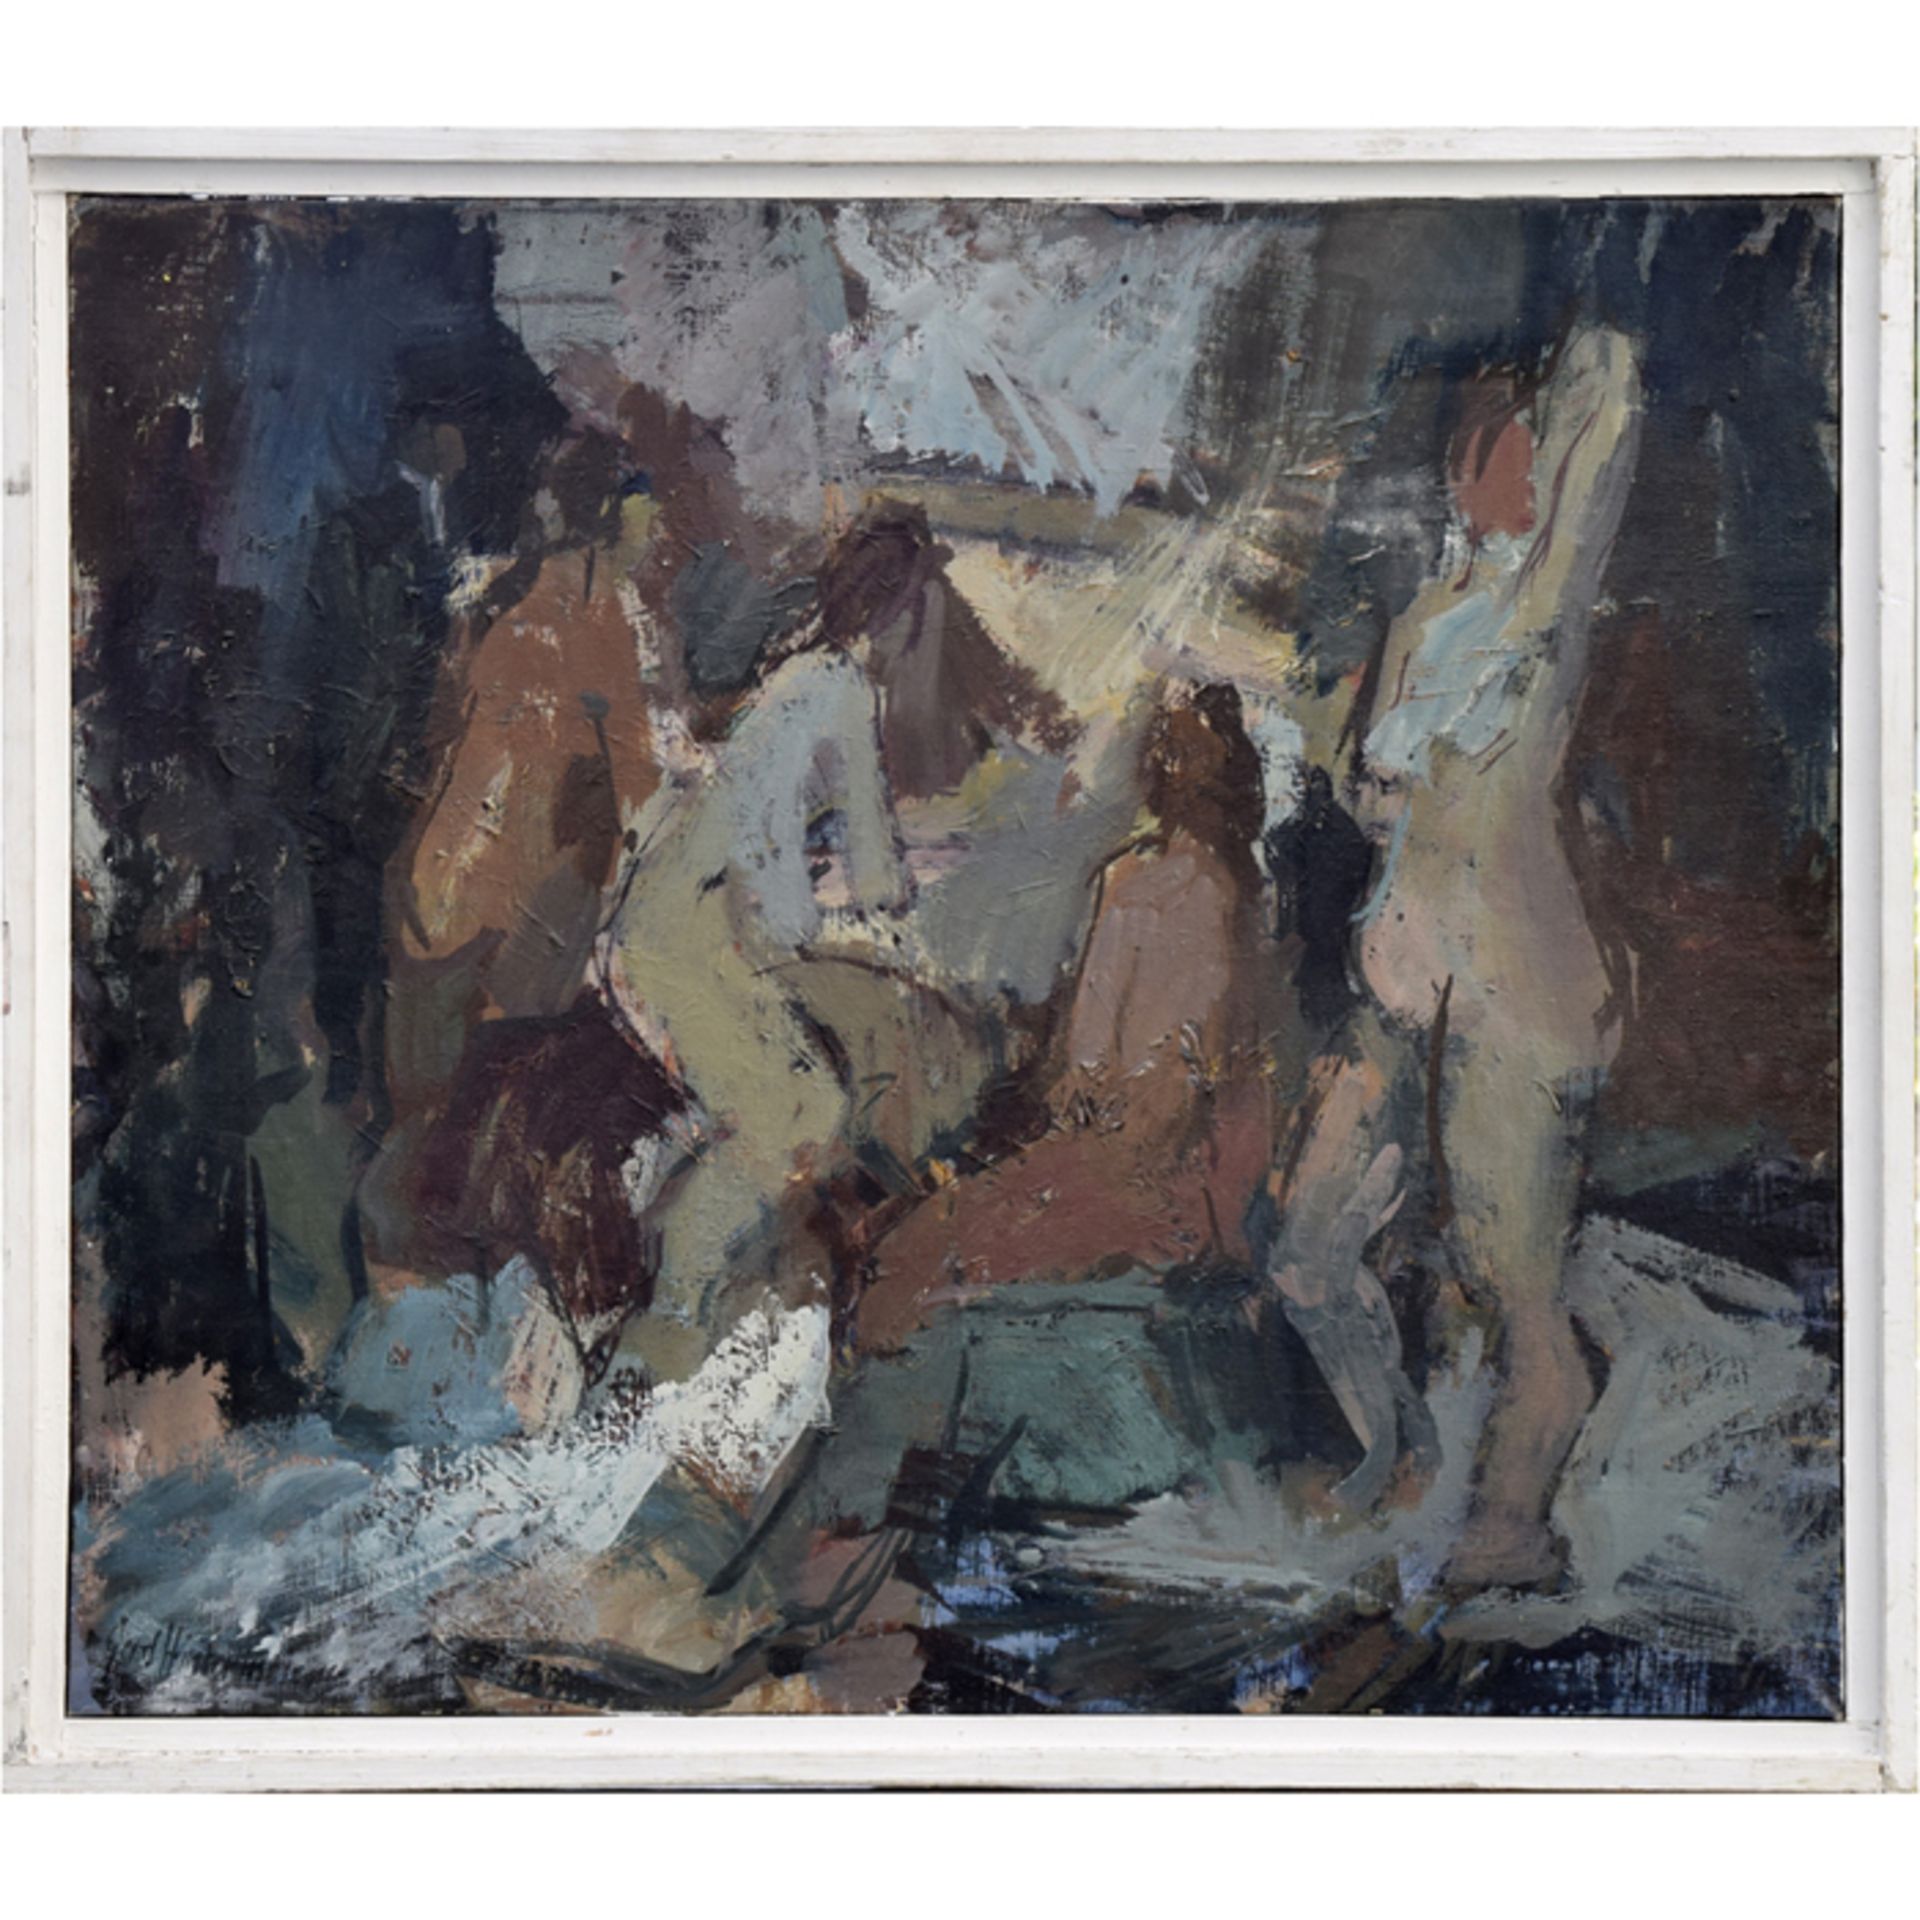 Gerd HINTERMEIER; *1942 Crailsheim; Acryl auf Leinwand "Aktkomposition"; li. unten sign.; 58 cm x 50